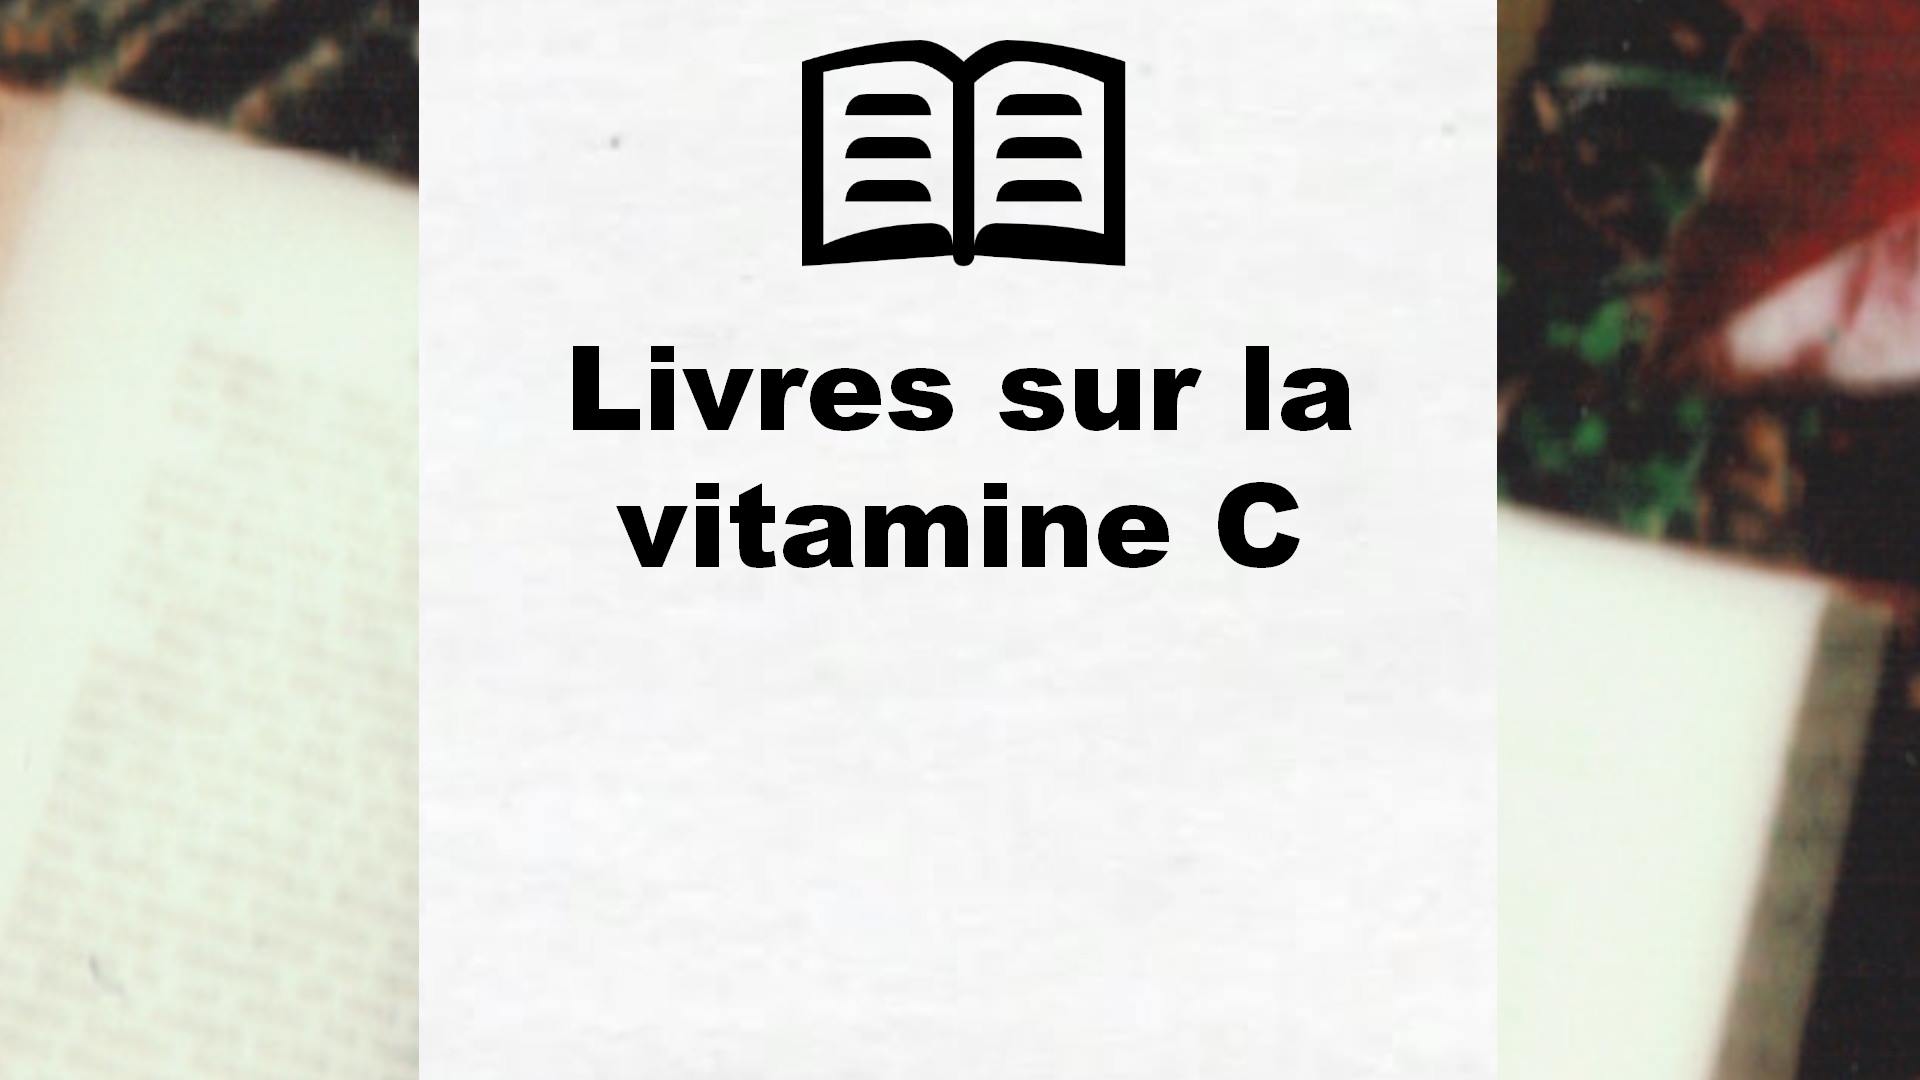 Livres sur la vitamine C